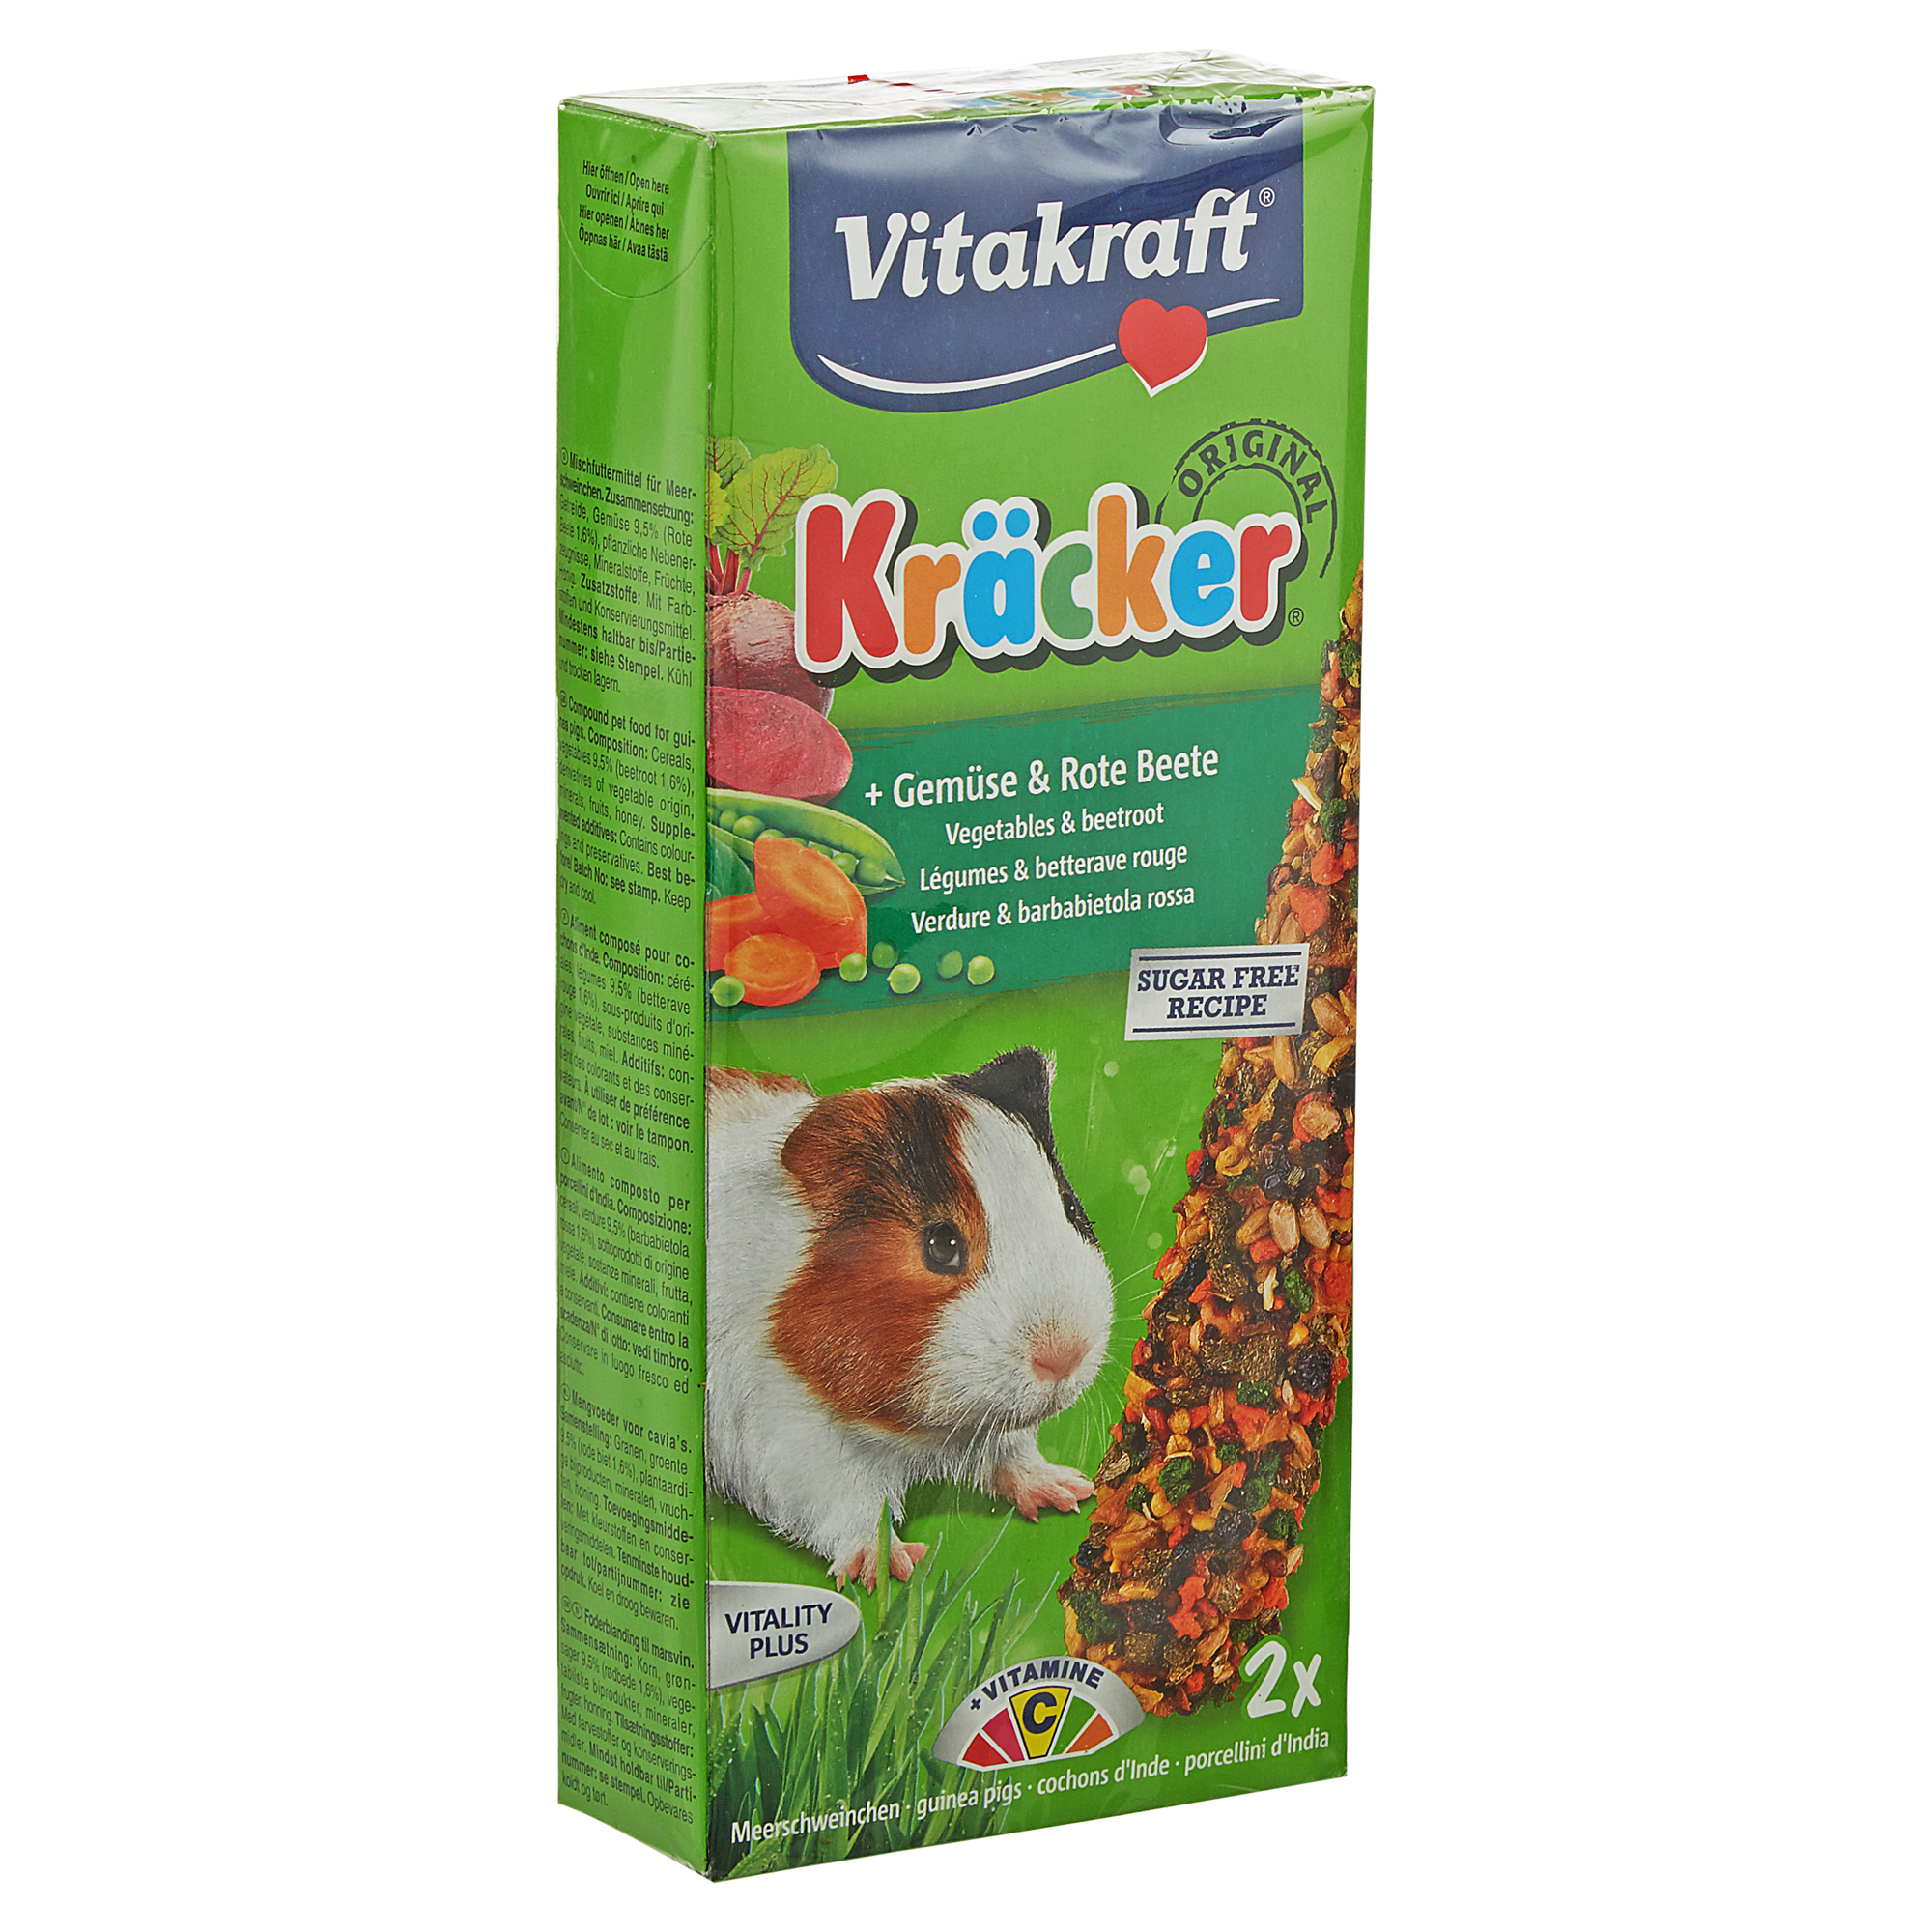 Meerschweinchenfutter Kräcker® Original Gemüse/Rote Beete 2 Stück + product picture